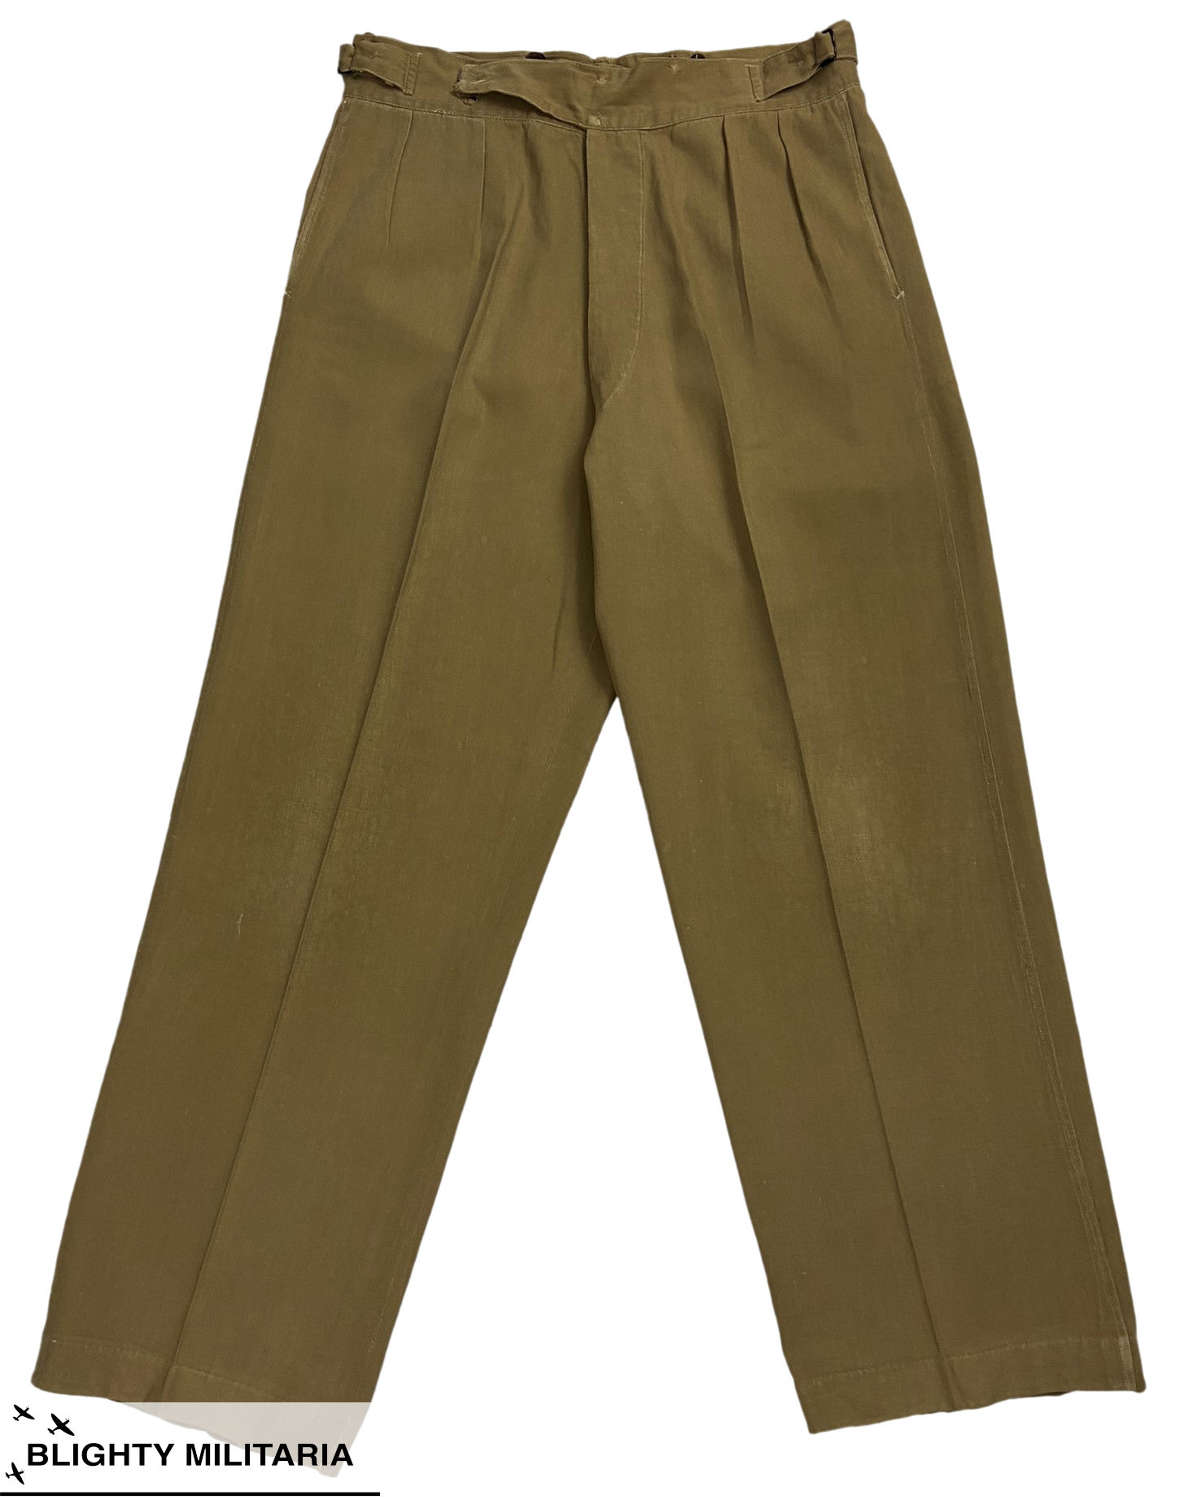 Original WW2 British Army Officer's Khaki Drill Trousers - Size 33x30